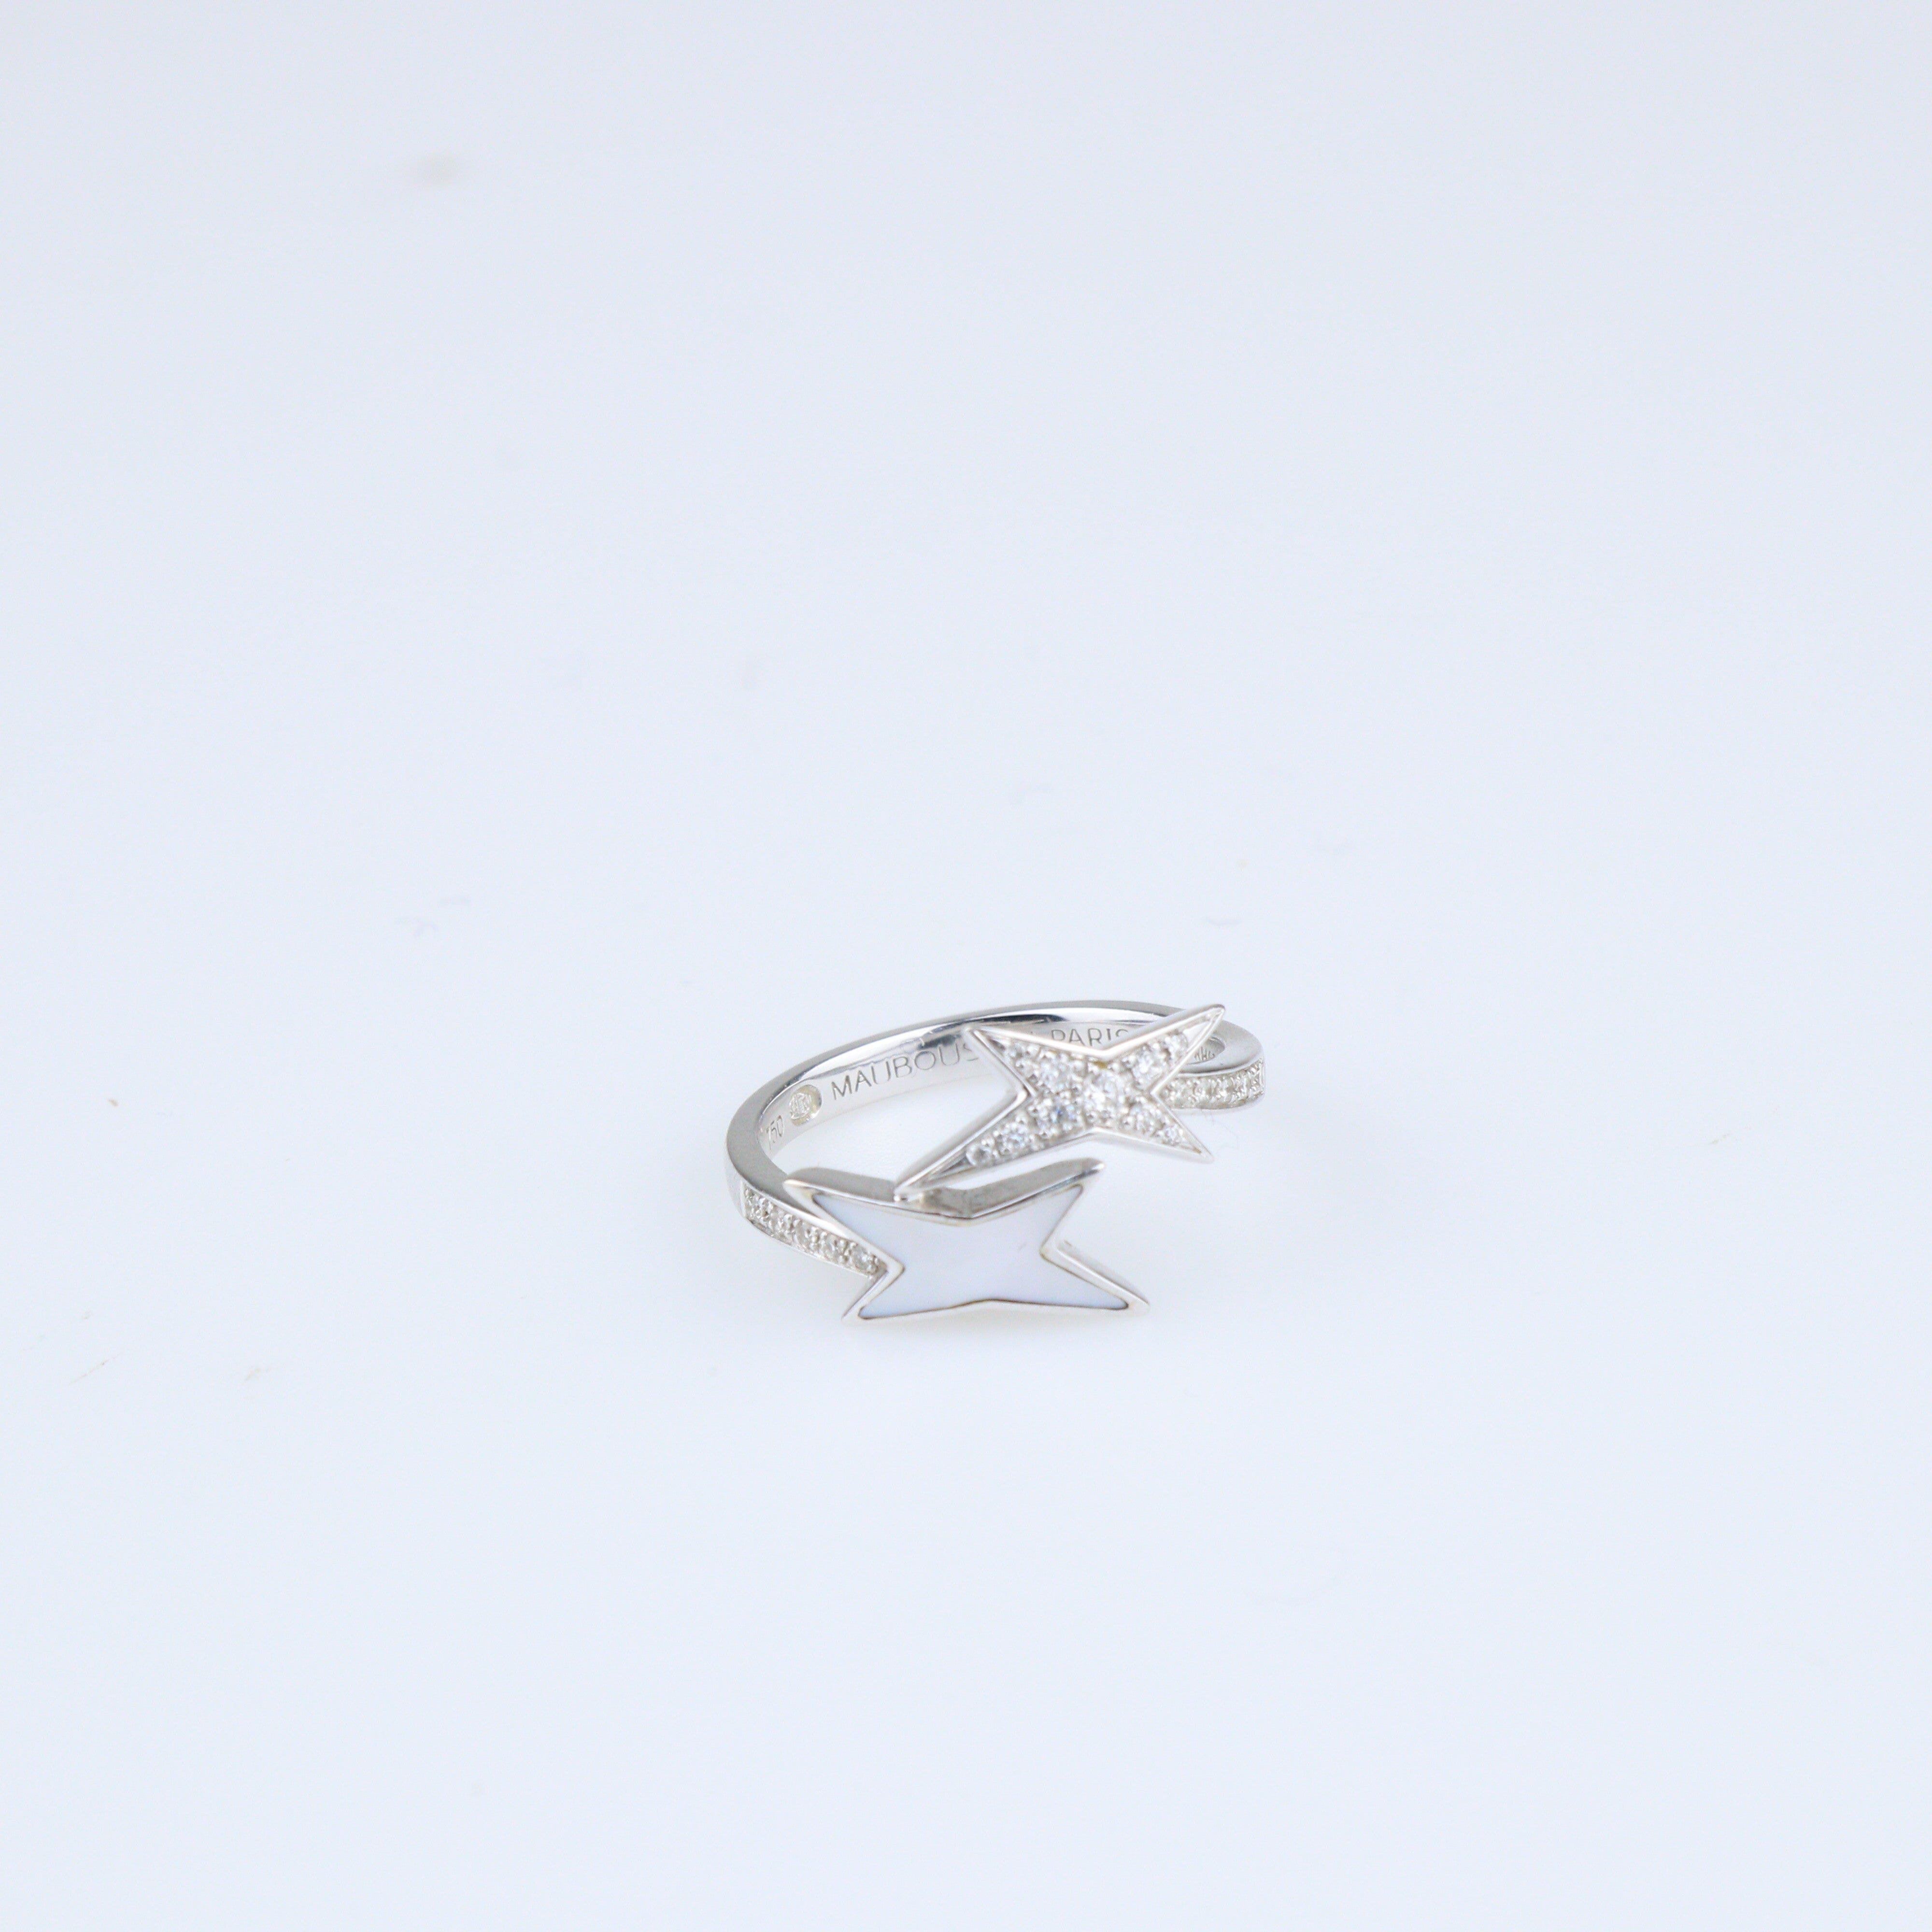 Etoile Star Of Life 18K White Gold Diamond Ring Fine Jewelry Mauboussin 